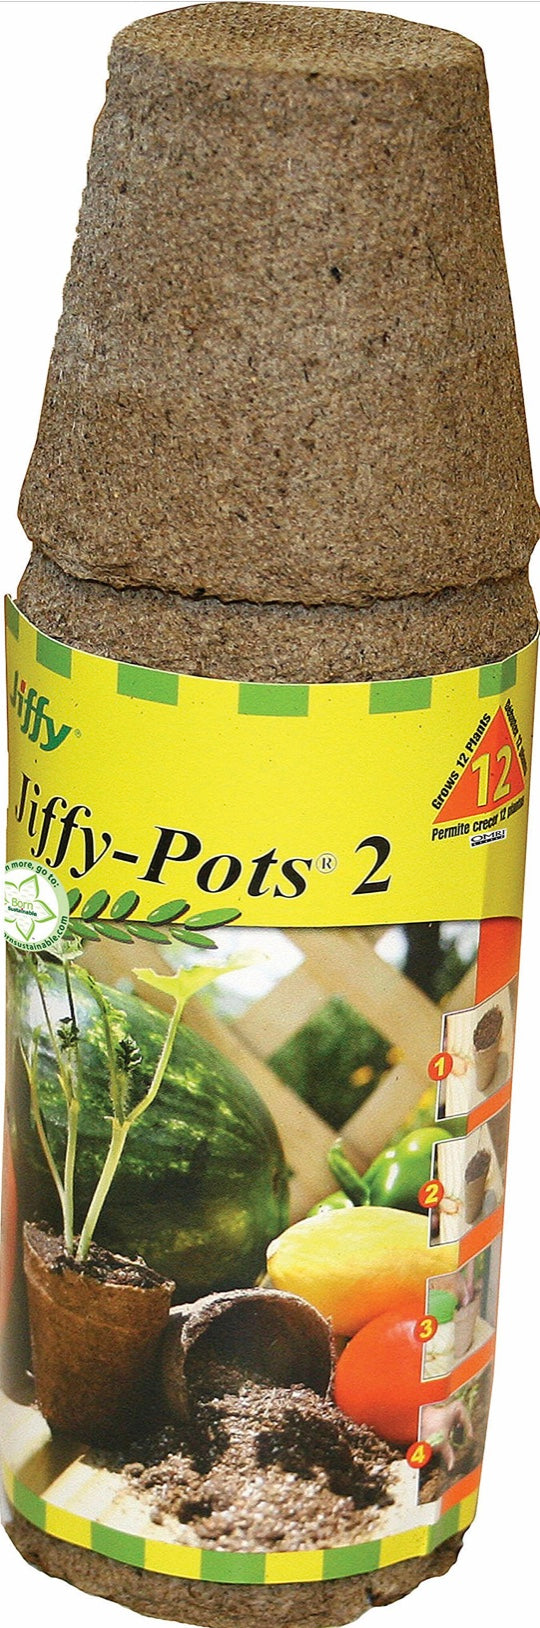 Jiffy Pots 2, 12ct